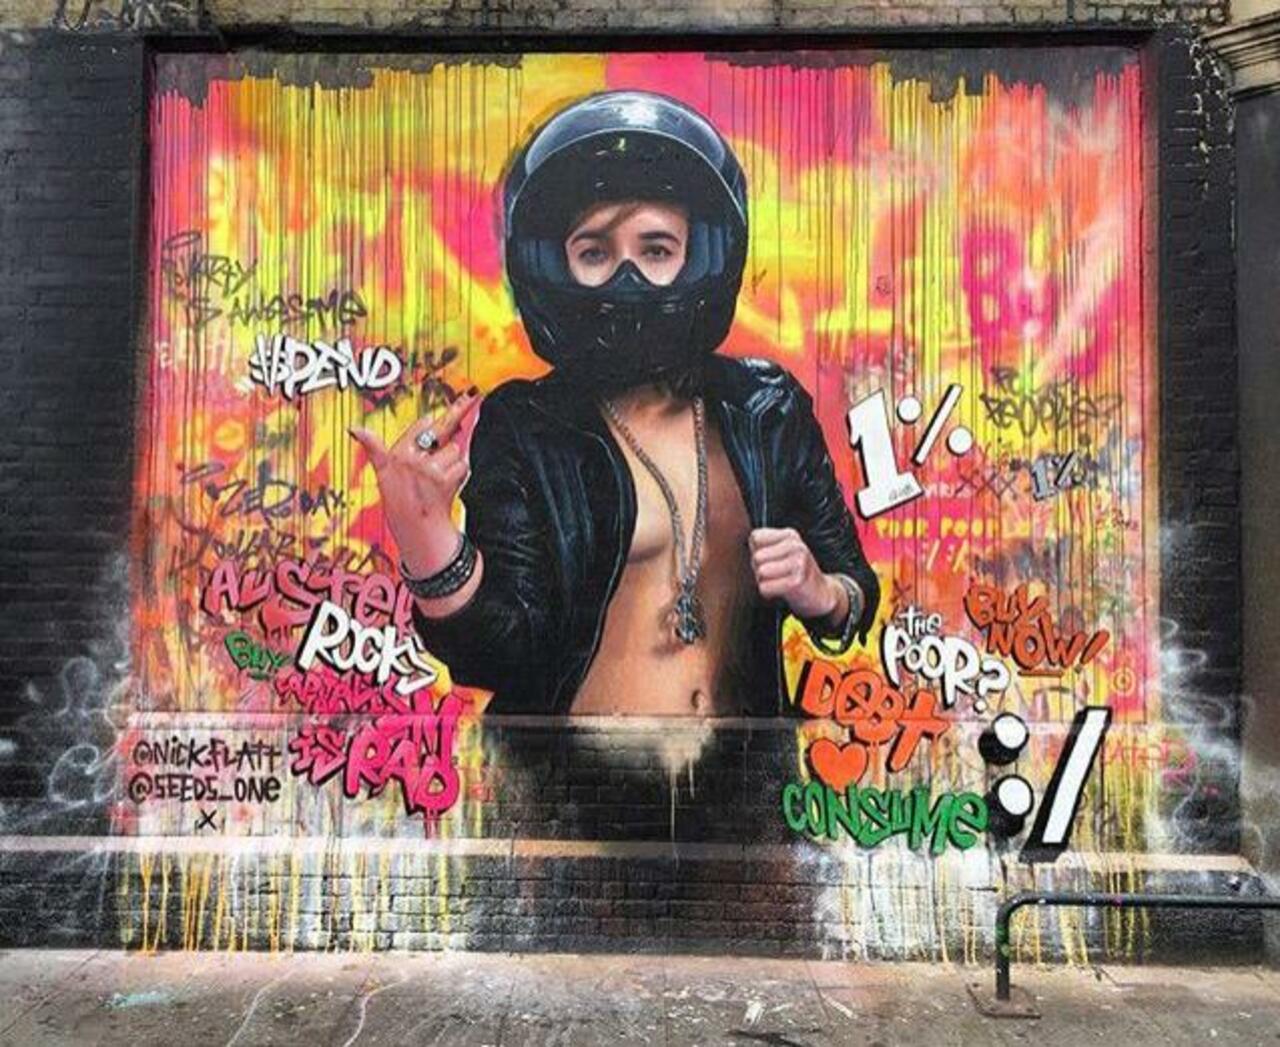 New Street Art collab by Nick Flatt &  Seeds One in London 

#art #graffiti #mural #streetart http://t.co/JPpxKWjkzm